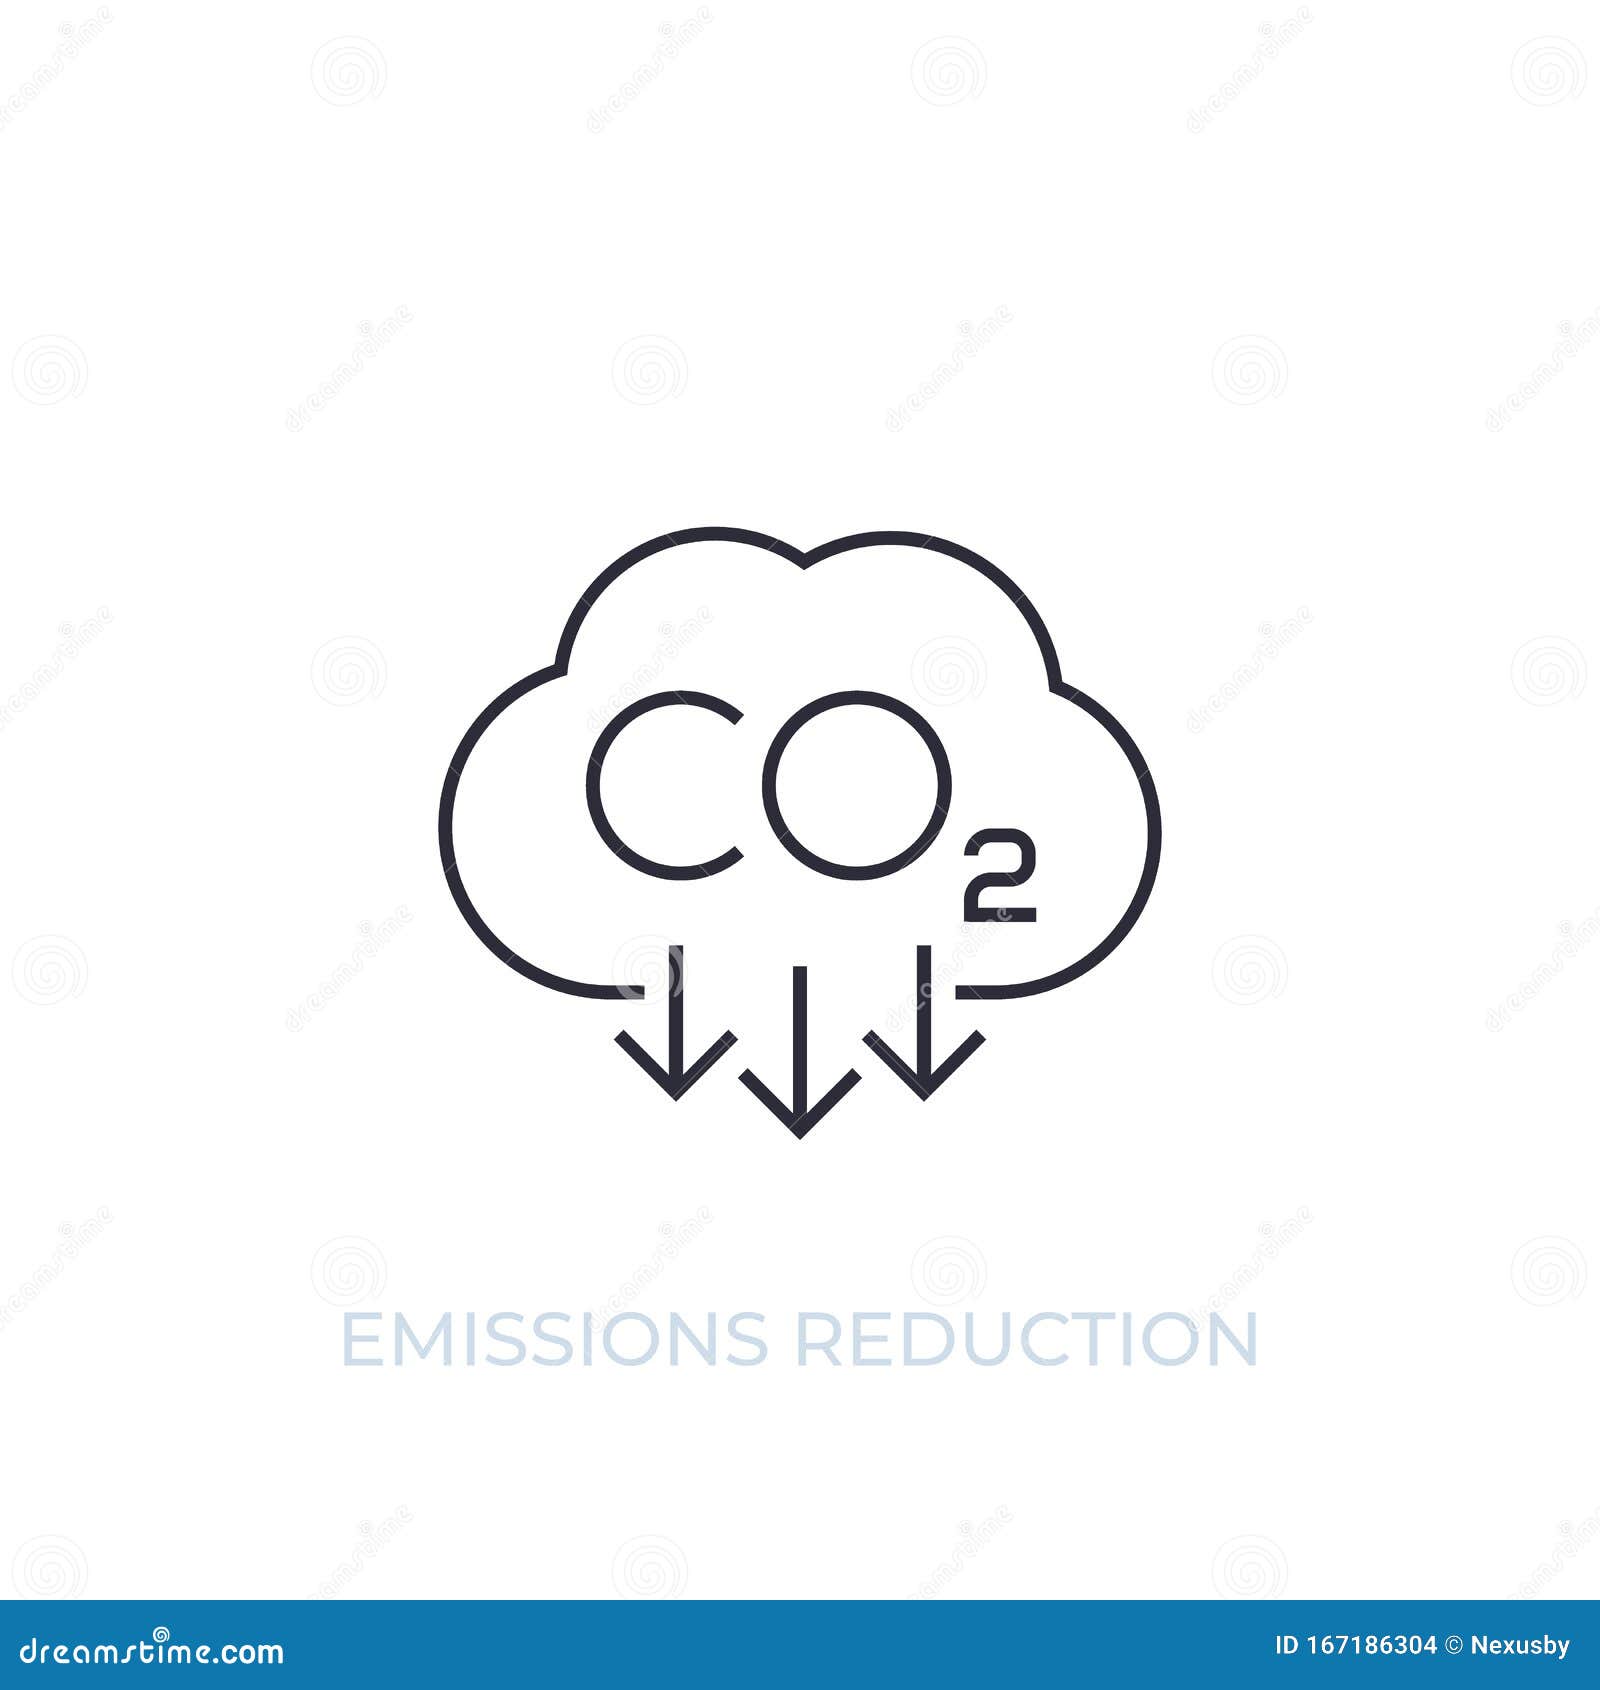 co2, carbon emissions reduction,  line icon